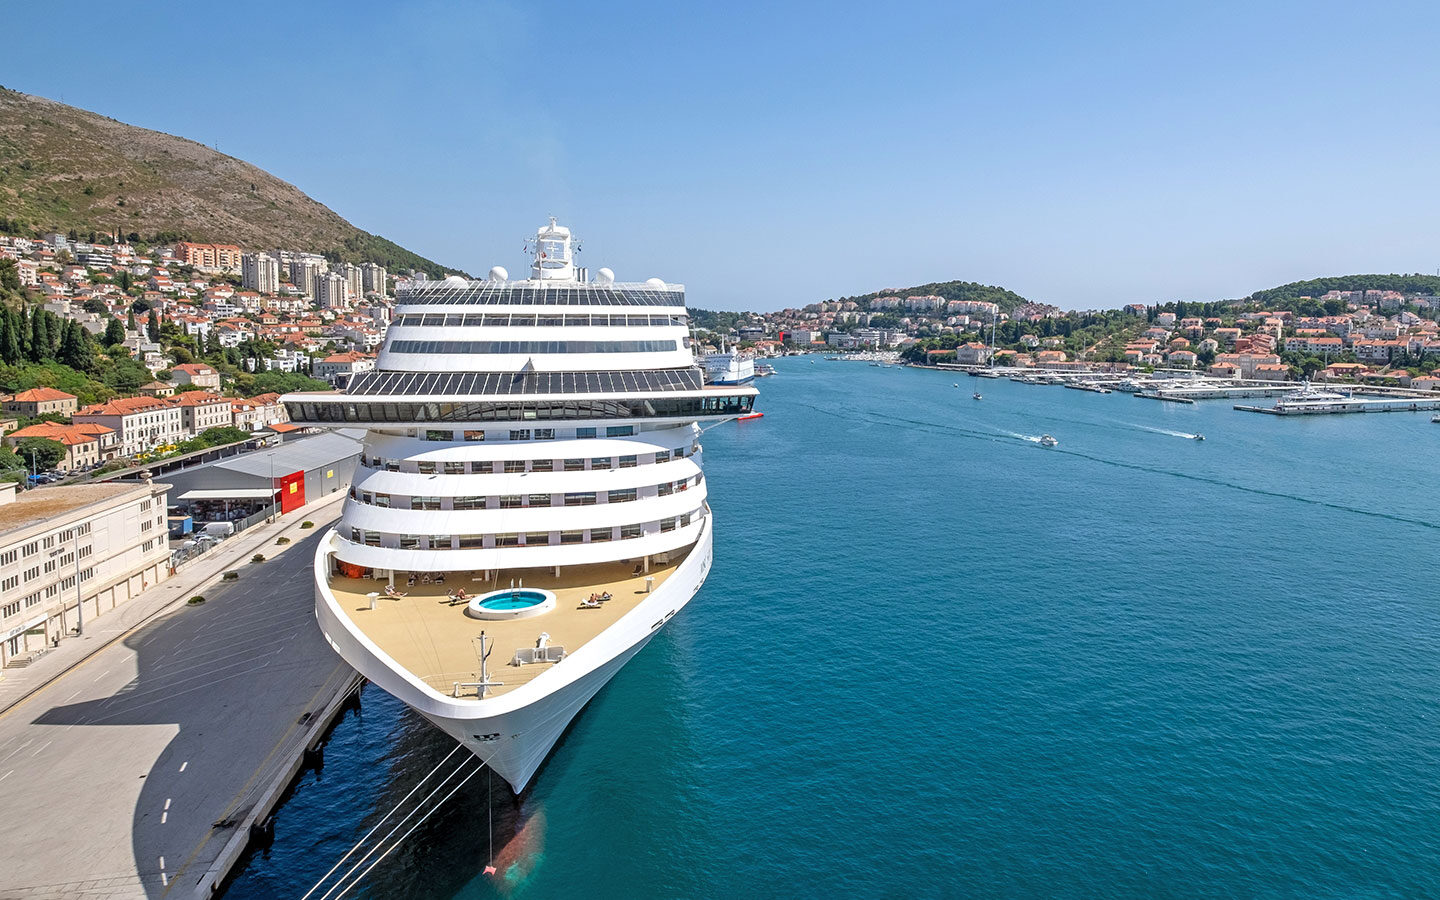 Cruise ship docked in Dubrovnik